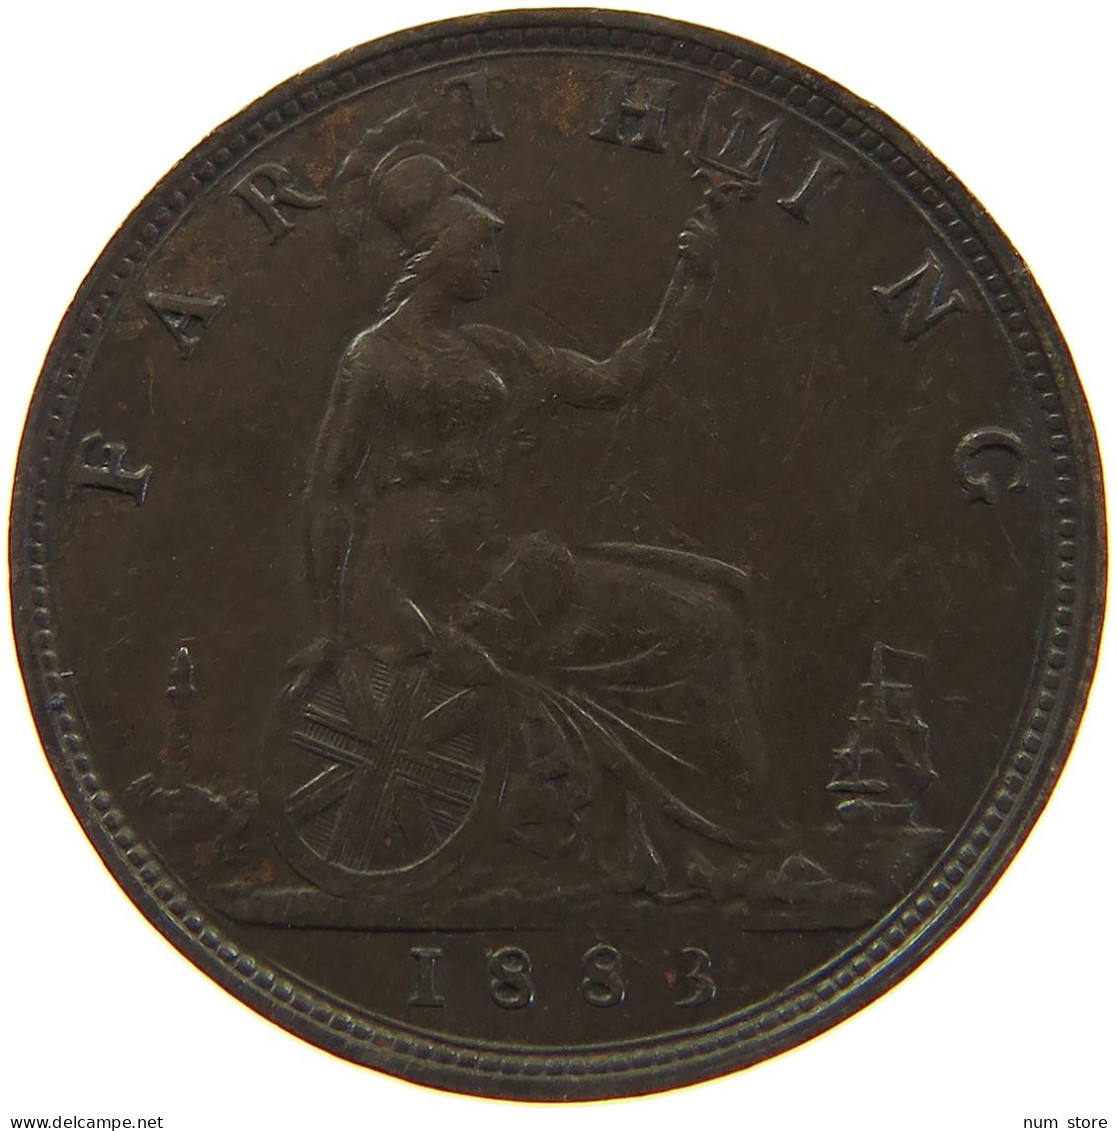 GREAT BRITAIN FARTHING 1883 Victoria 1837-1901 #s010 0047 - B. 1 Farthing